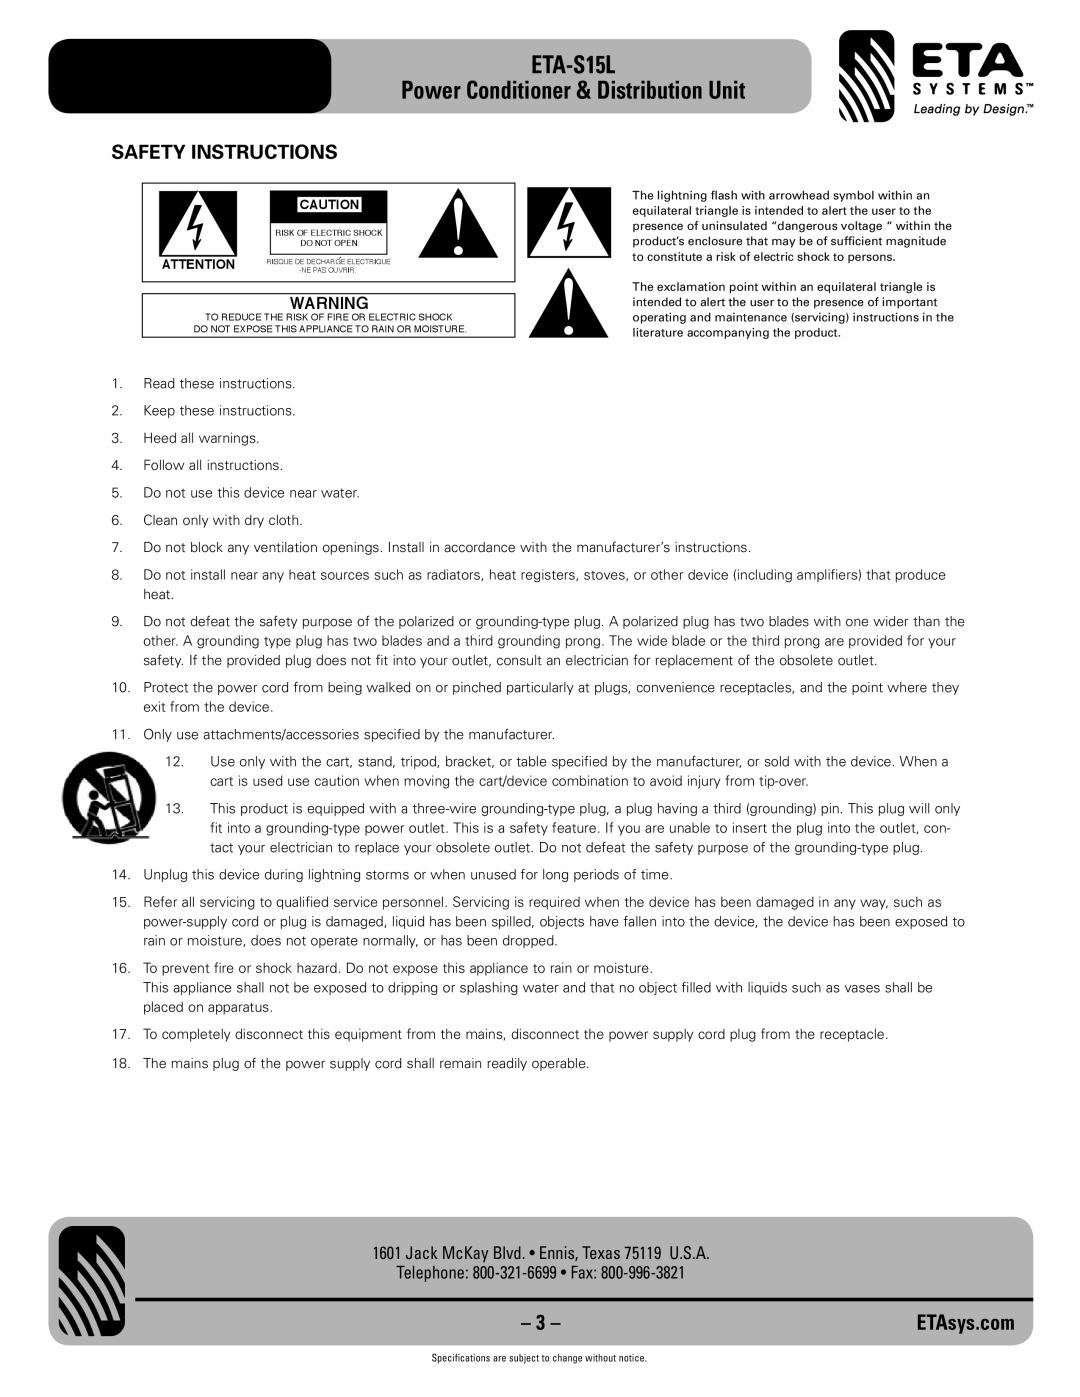 ETA Systems ETA-S15L specifications Safety Instructions 